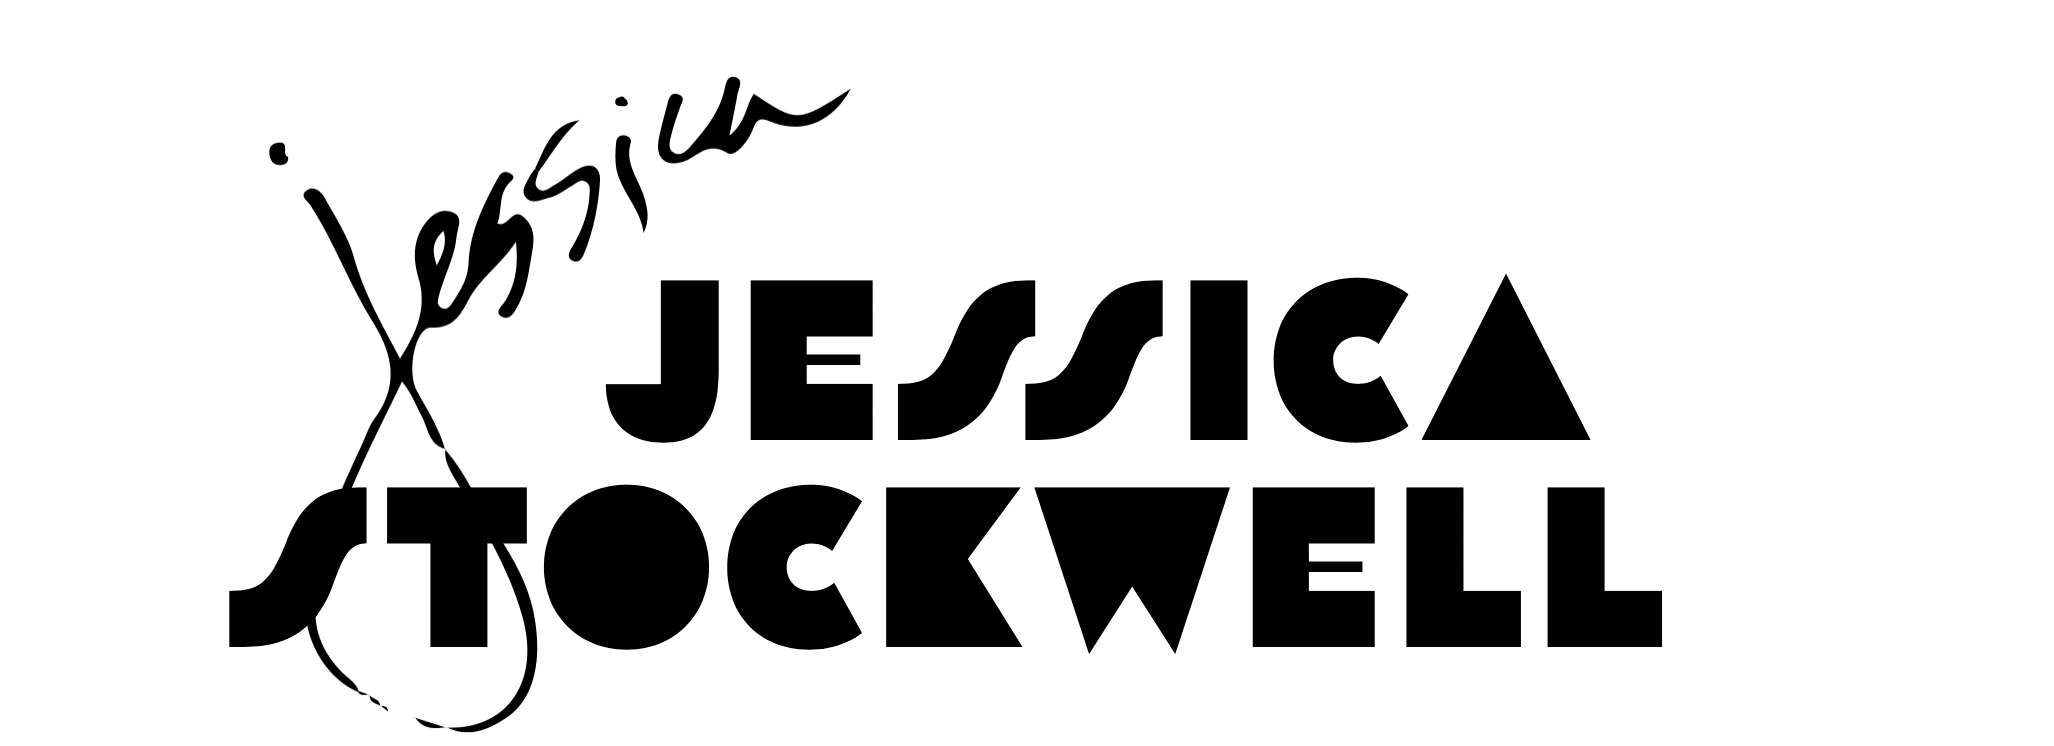 Jessica Stockwell - logo